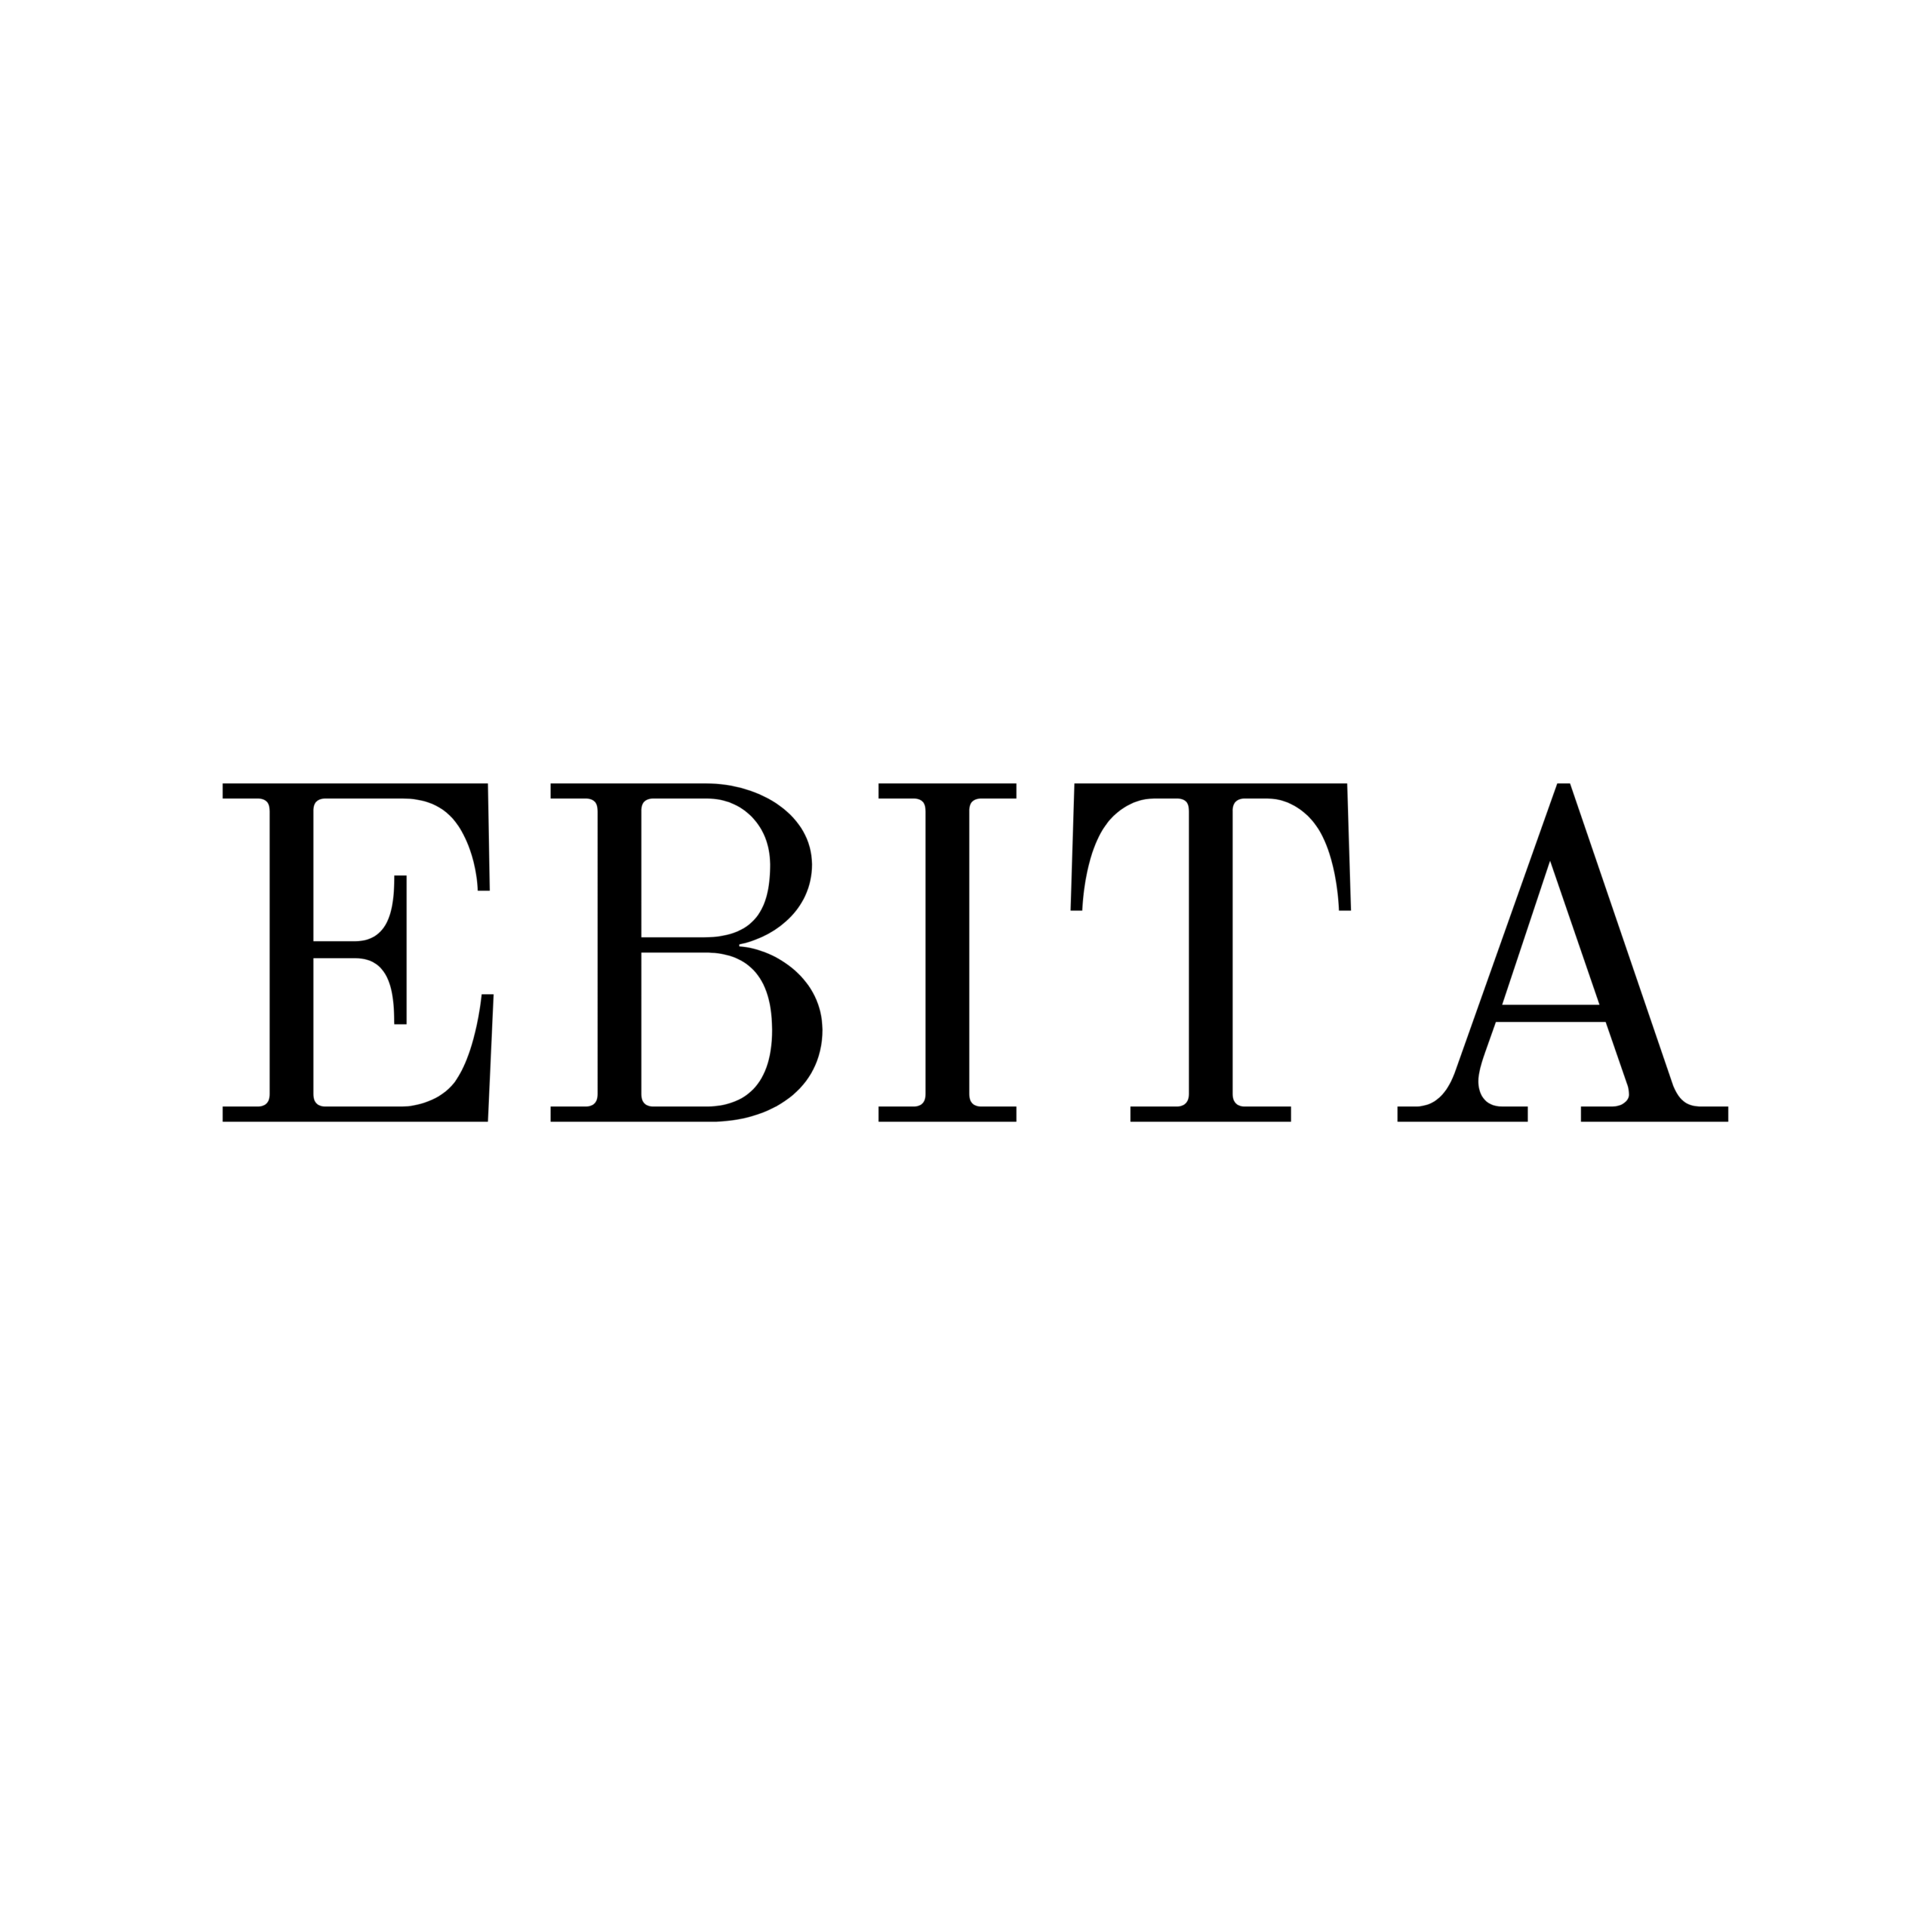 (c) Ebita.de